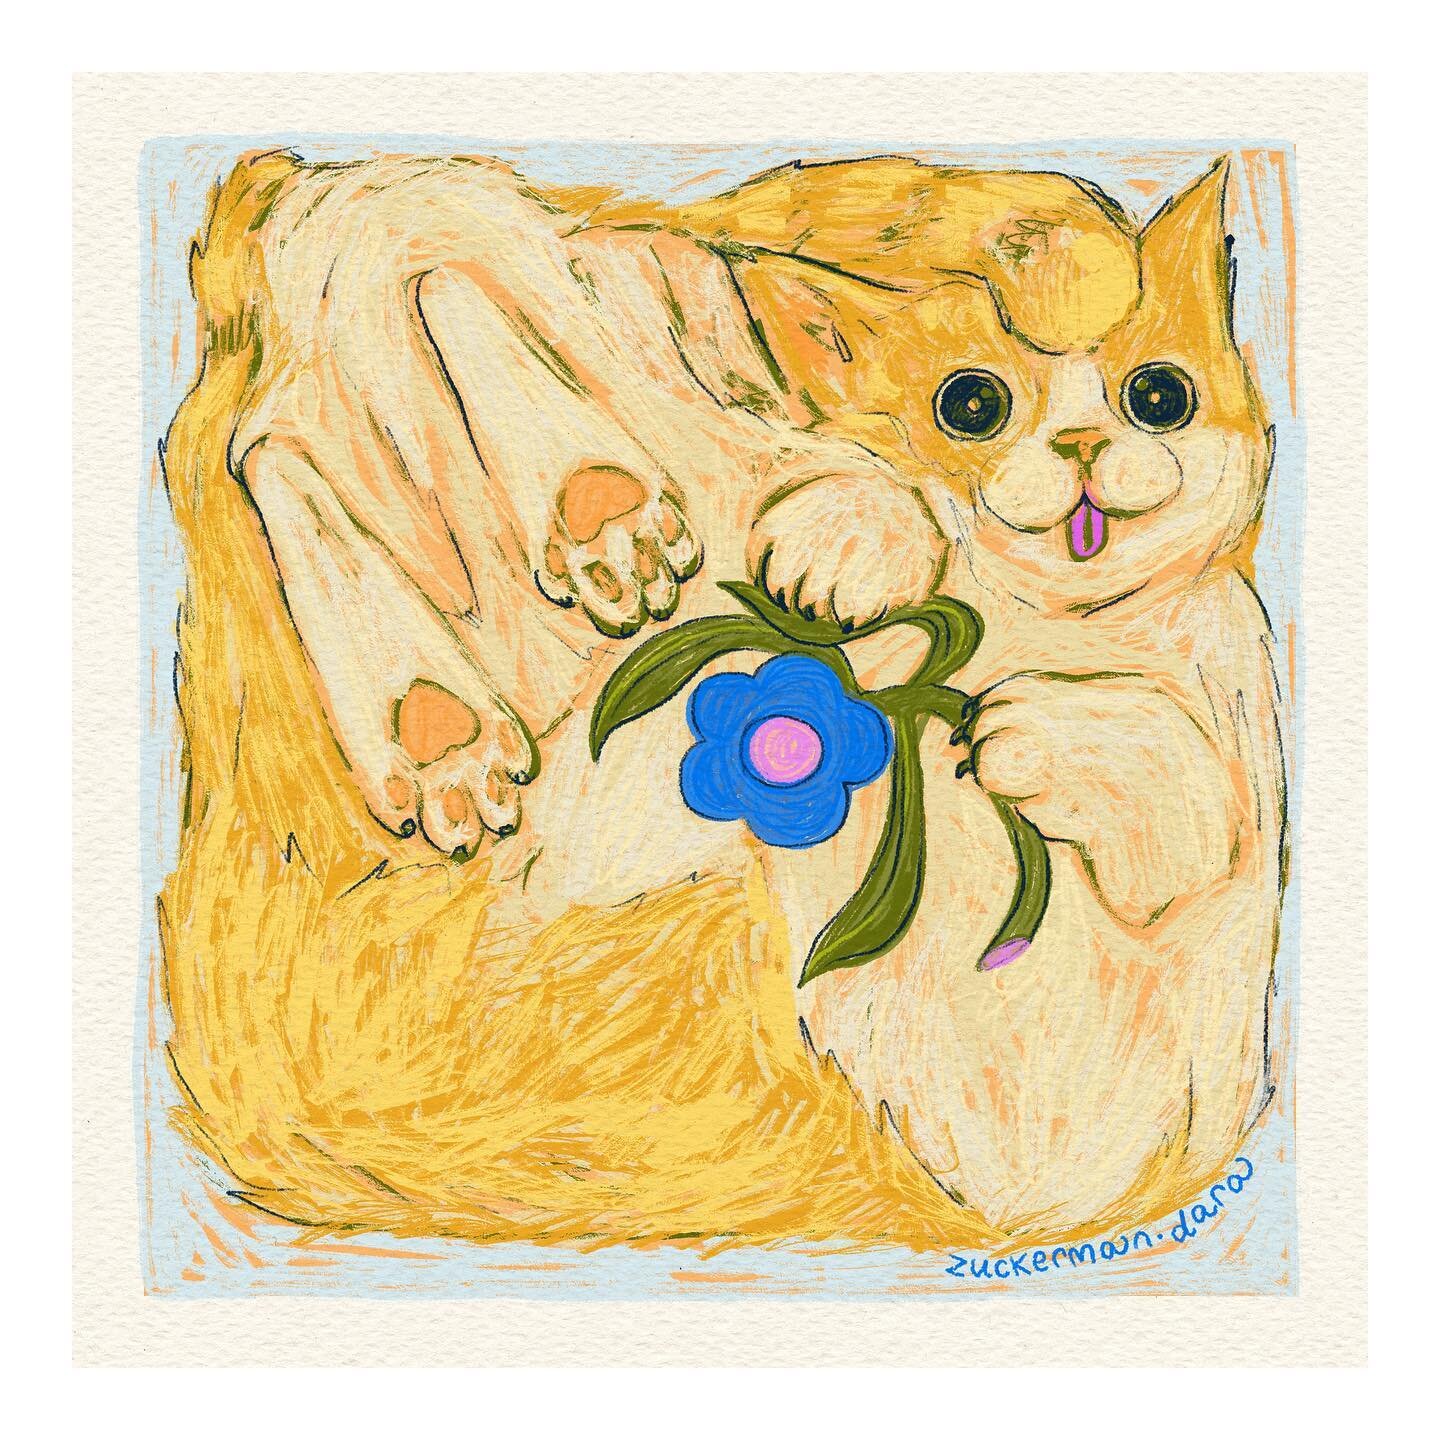 A cat! 🐈🌻💛
.
.
.
.
#cat #catsofinstagram #yellowcat #orangecat #blueflowers #squishy #squish #sketchbook #mixedmedia #surrealism  #acrylicpaint #smallbusiness  #coloredpencil #illustrator #drawing #catdrawing #womenofillustration #womenwhodraw #wo